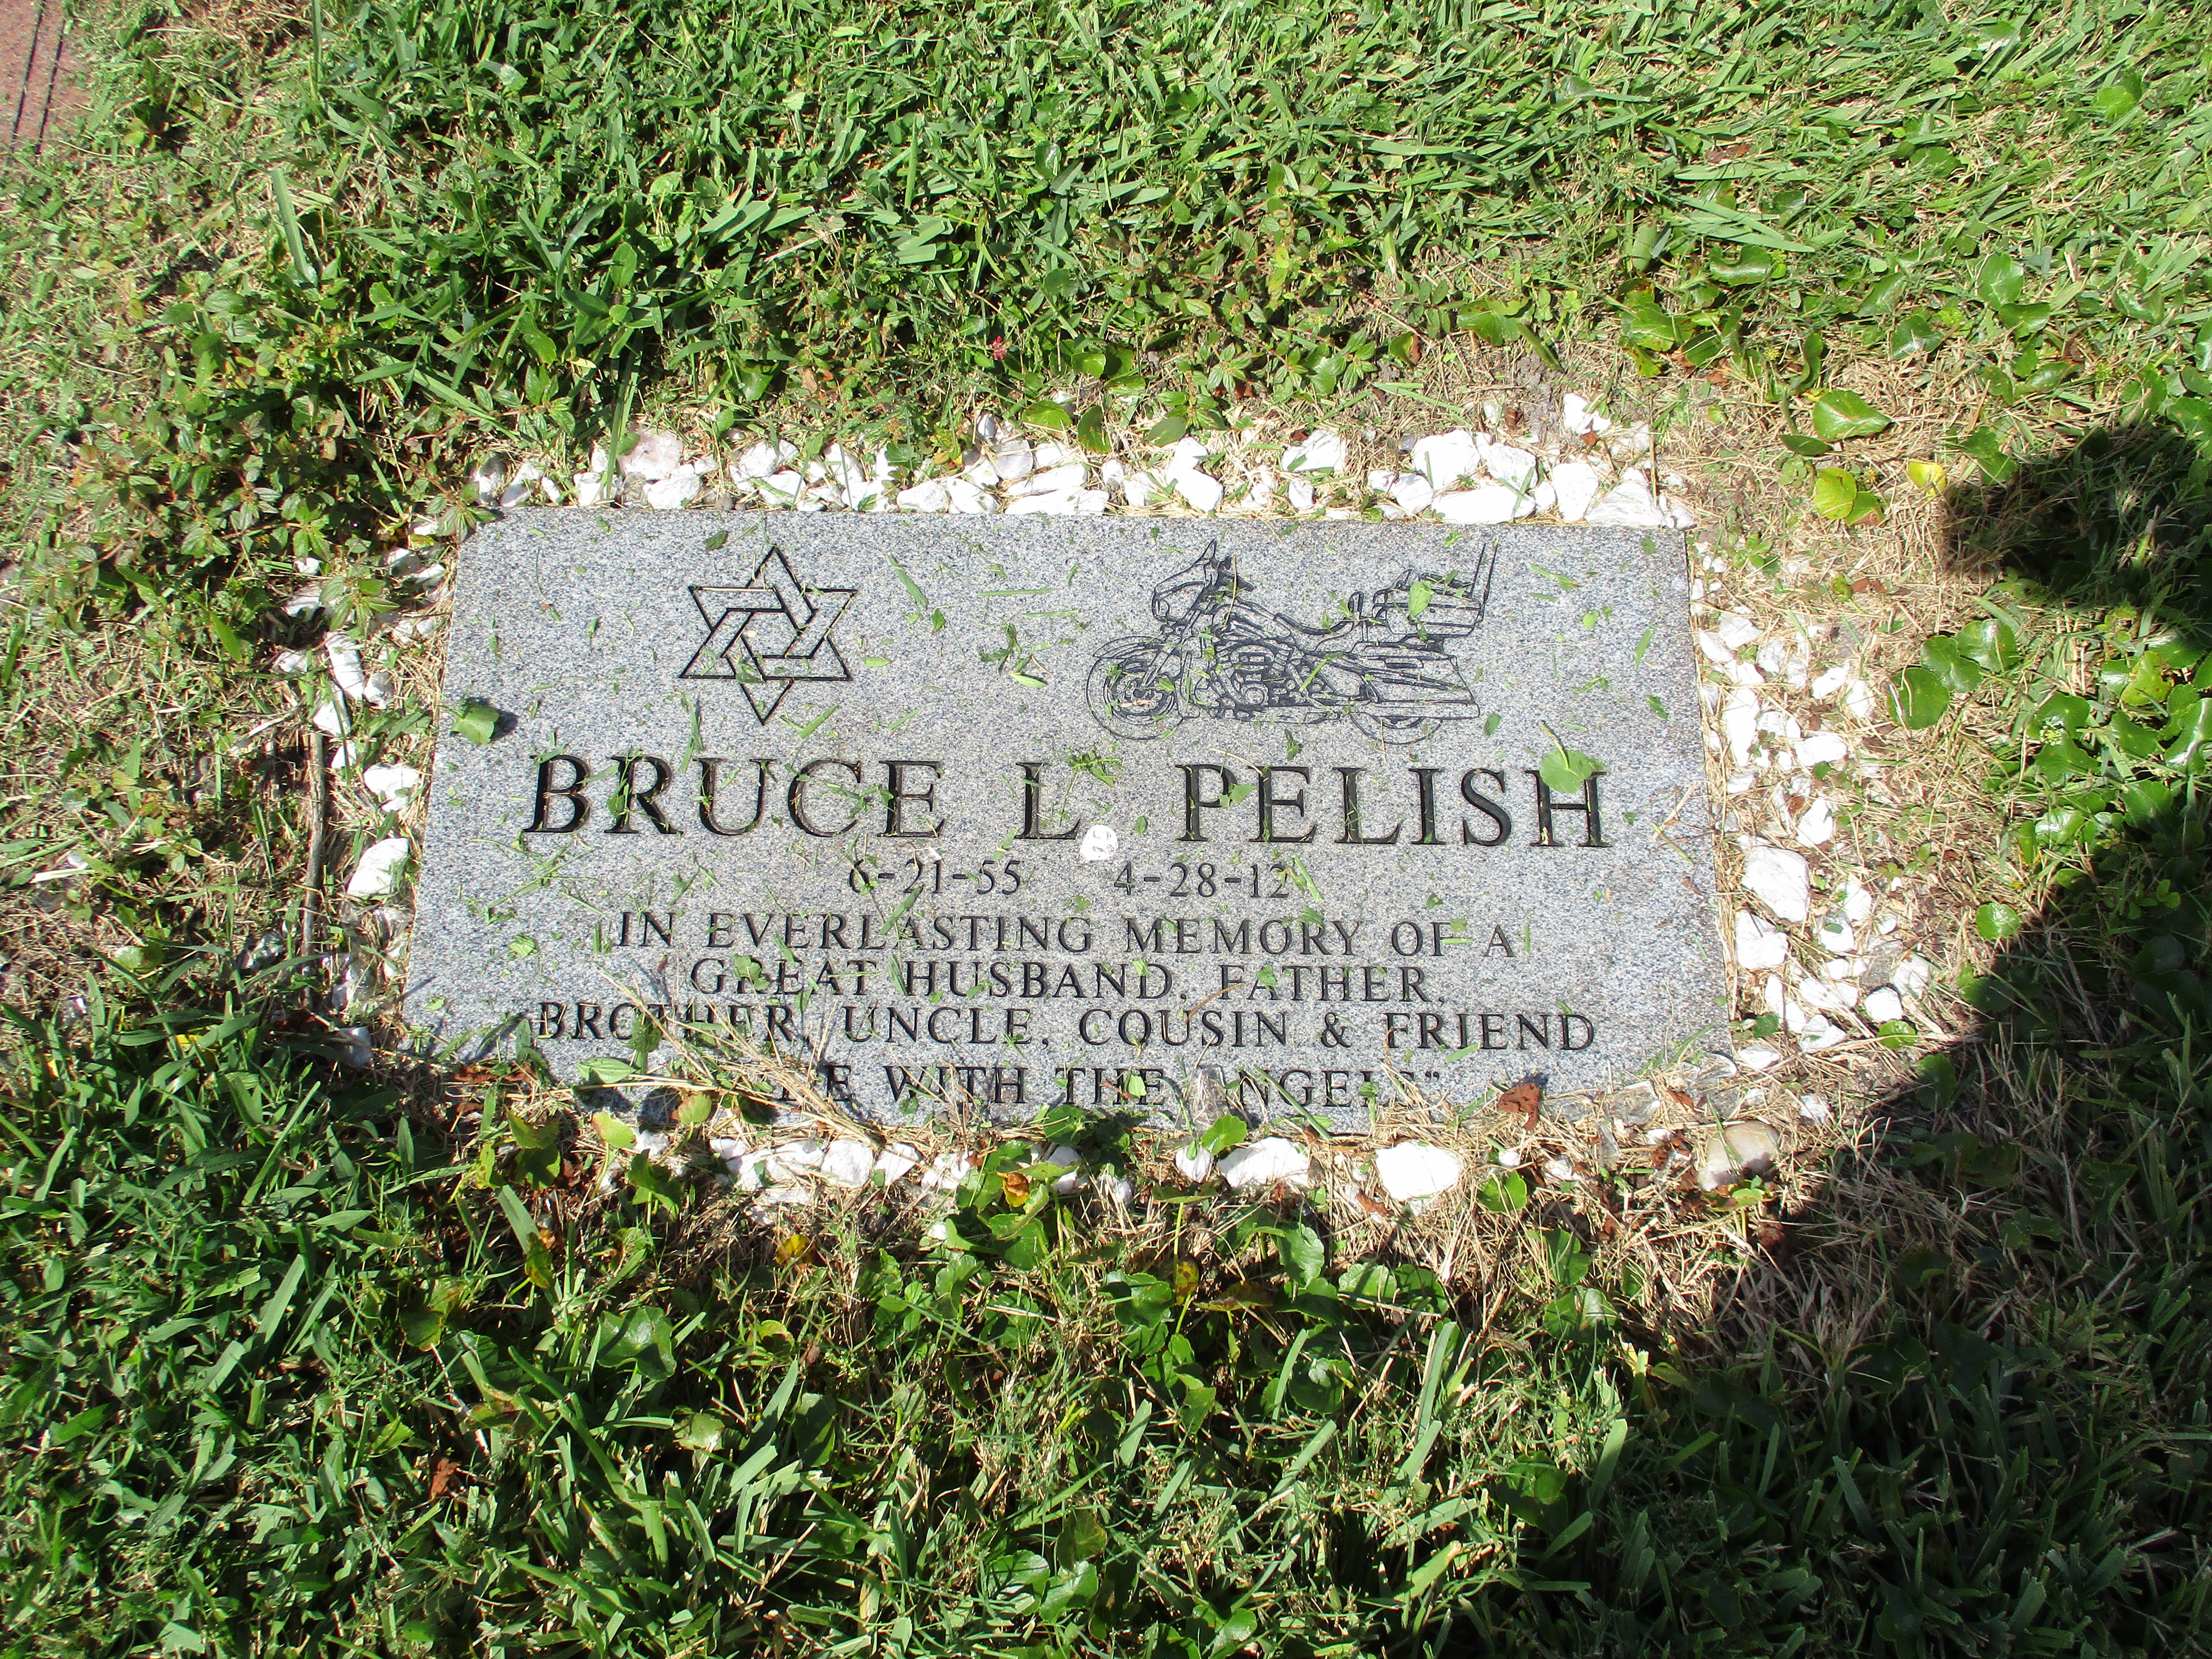 Bruce L Pelish